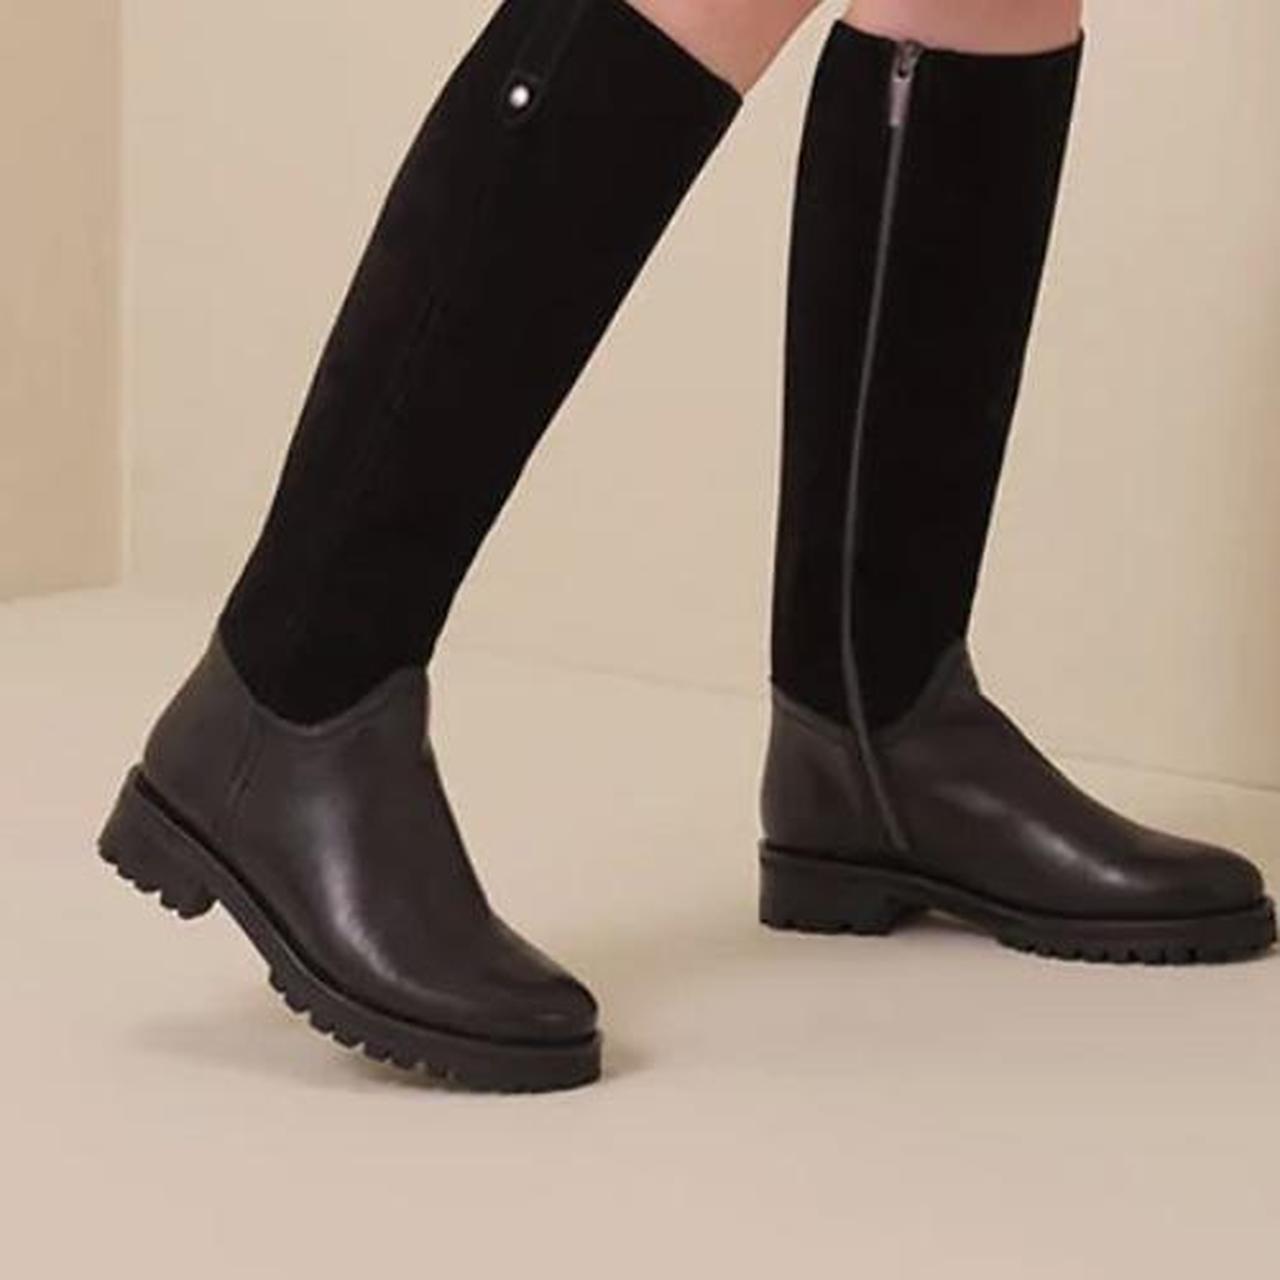 DUOltd Women's Black Boots